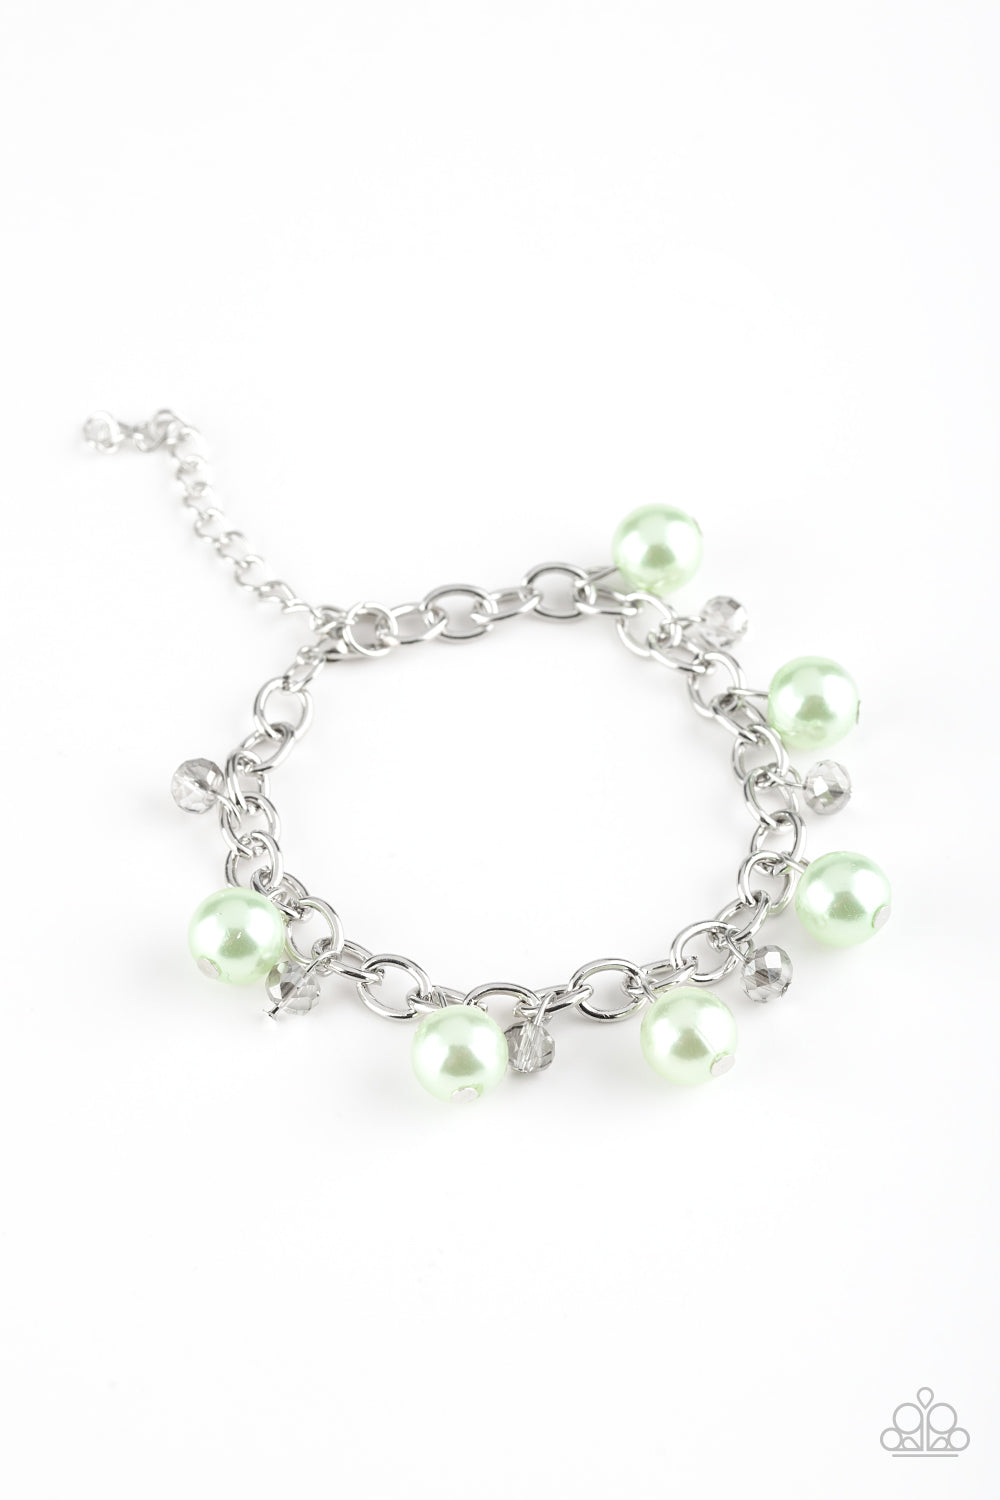 Paparazzi Country Club Chic - Green Pearls - Bracelet - $5 Jewelry With Ashley Swint